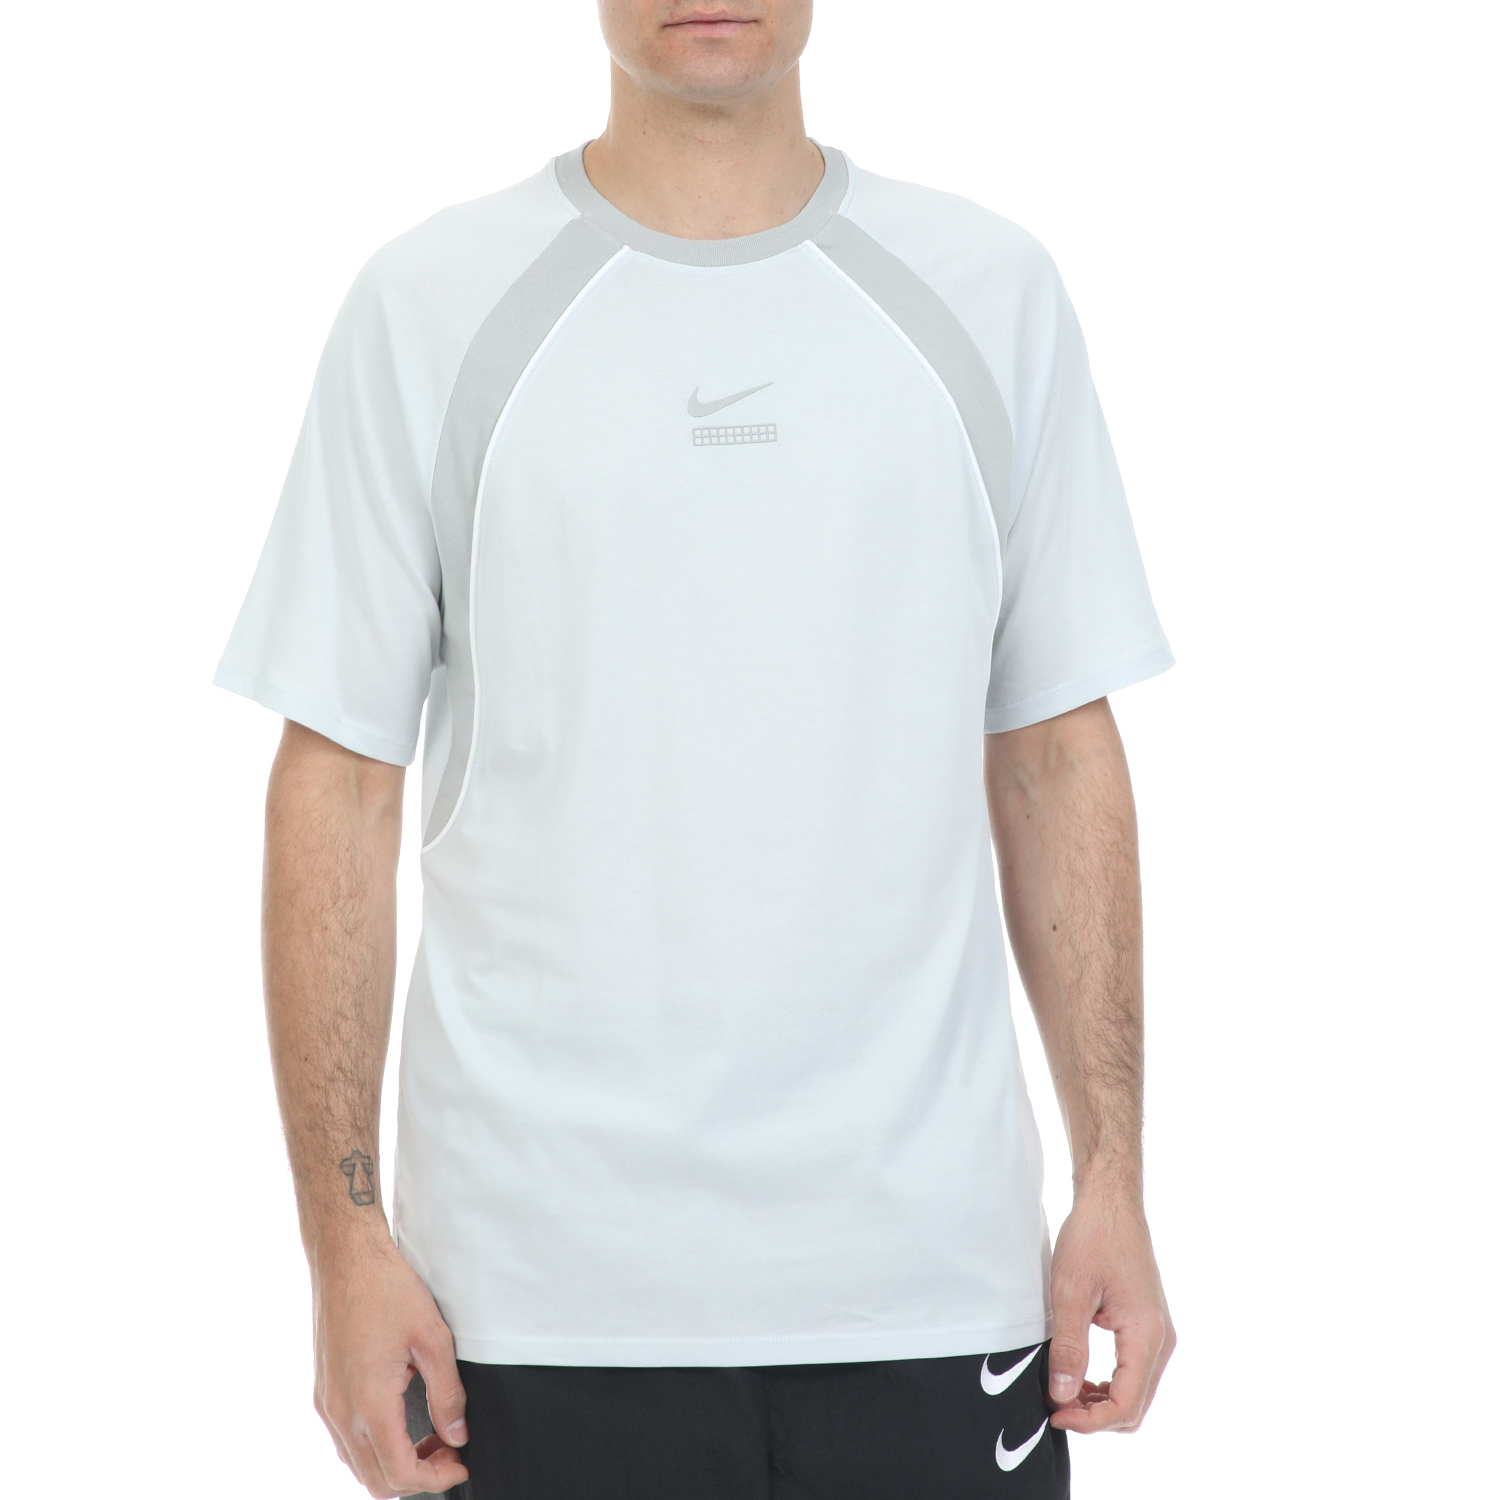 NIKE - Ανδρική μπλούζα ΝΙΚΕ NSW DNA SS TOP γκρι Ανδρικά/Ρούχα/Αθλητικά/T-shirt